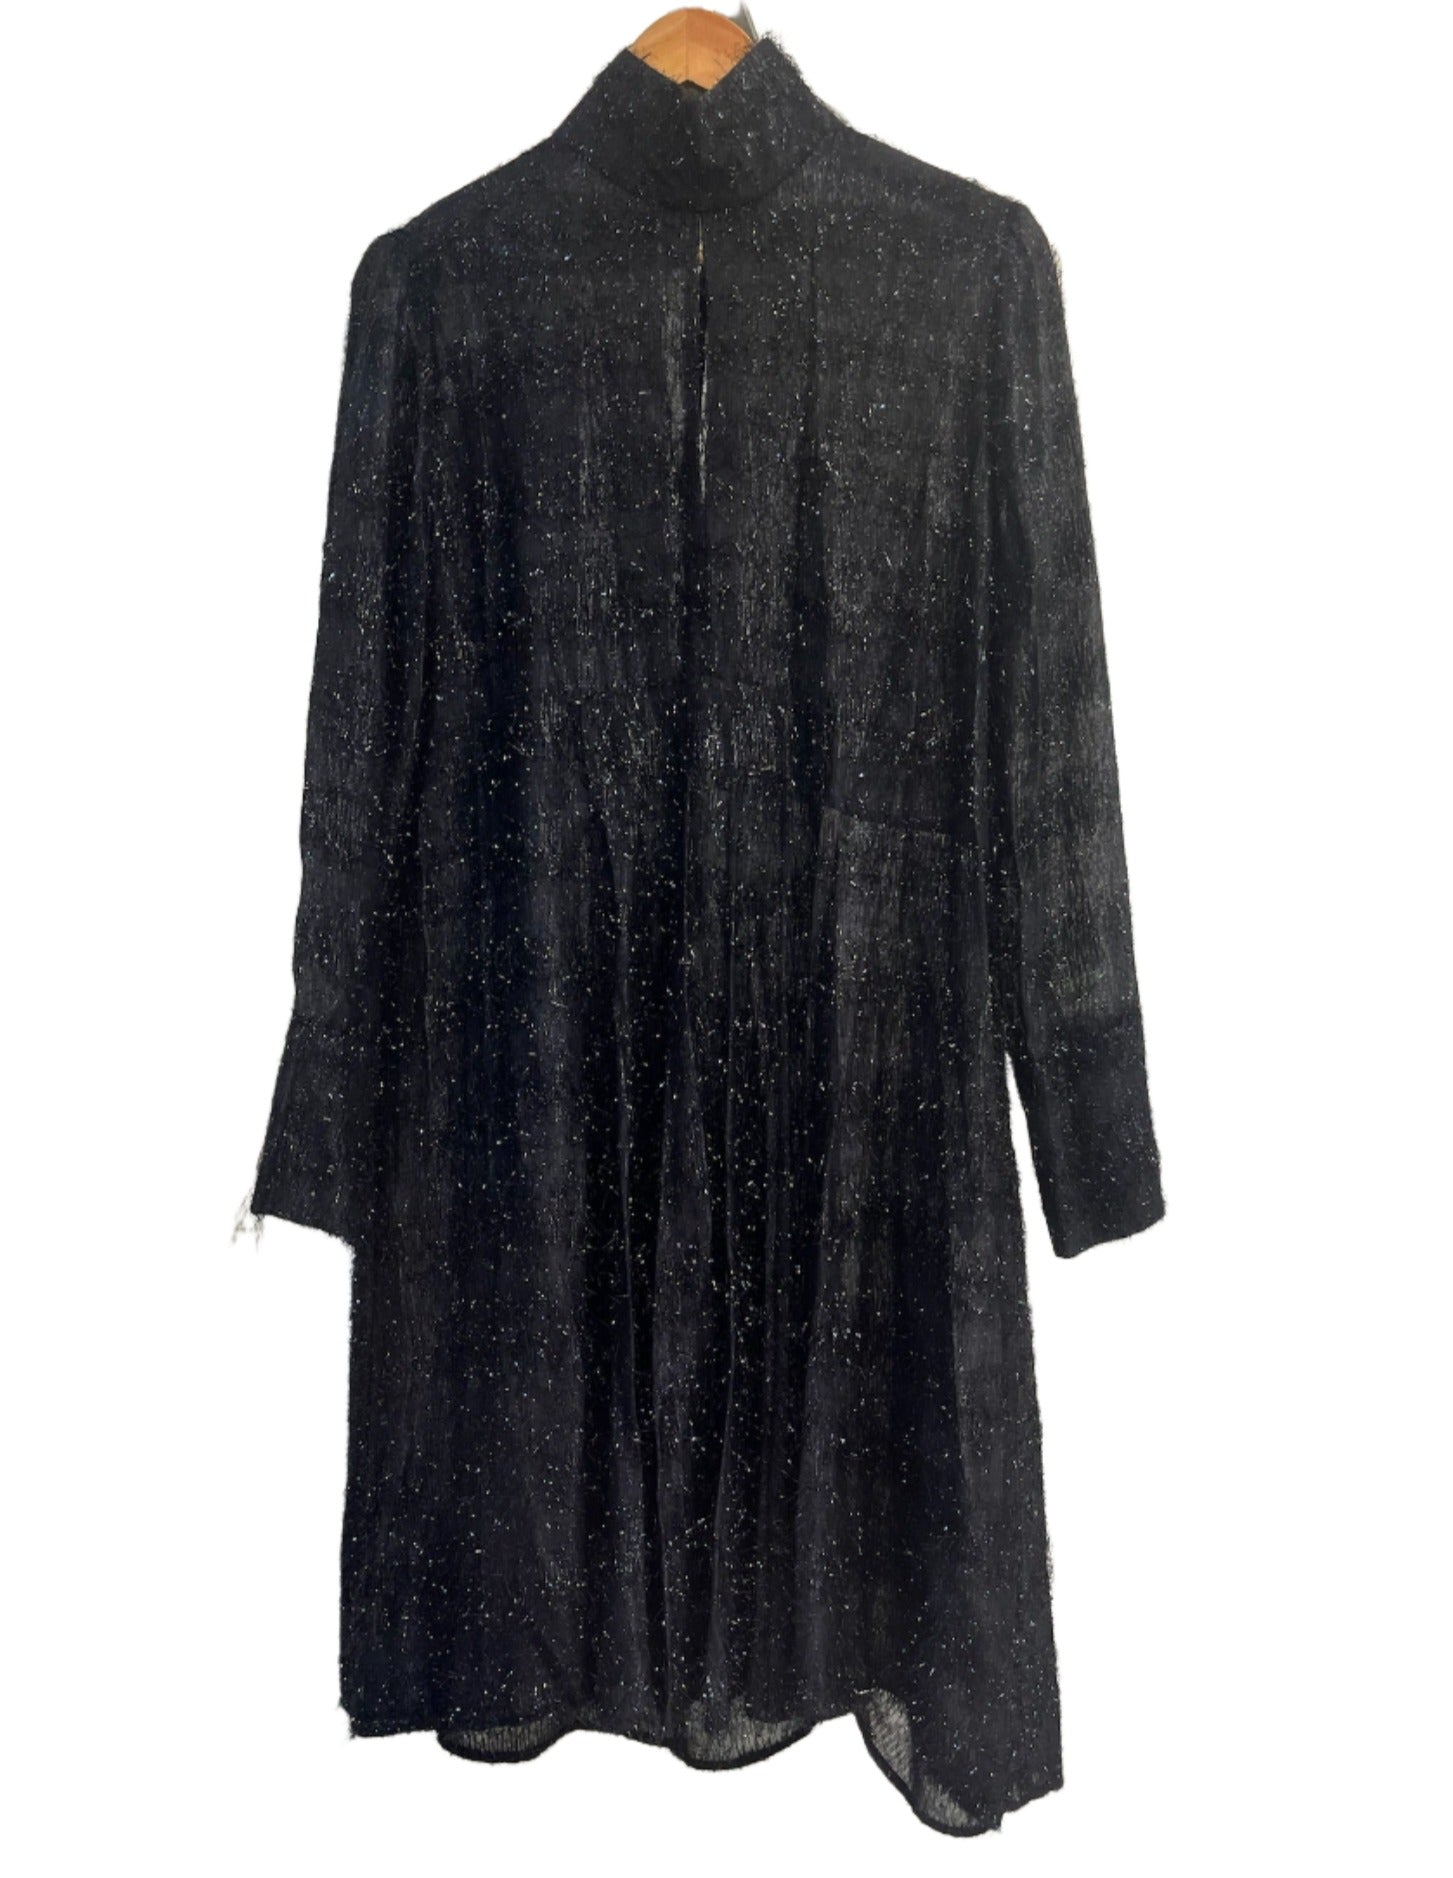 Scanlan Theodore Black Dress 8